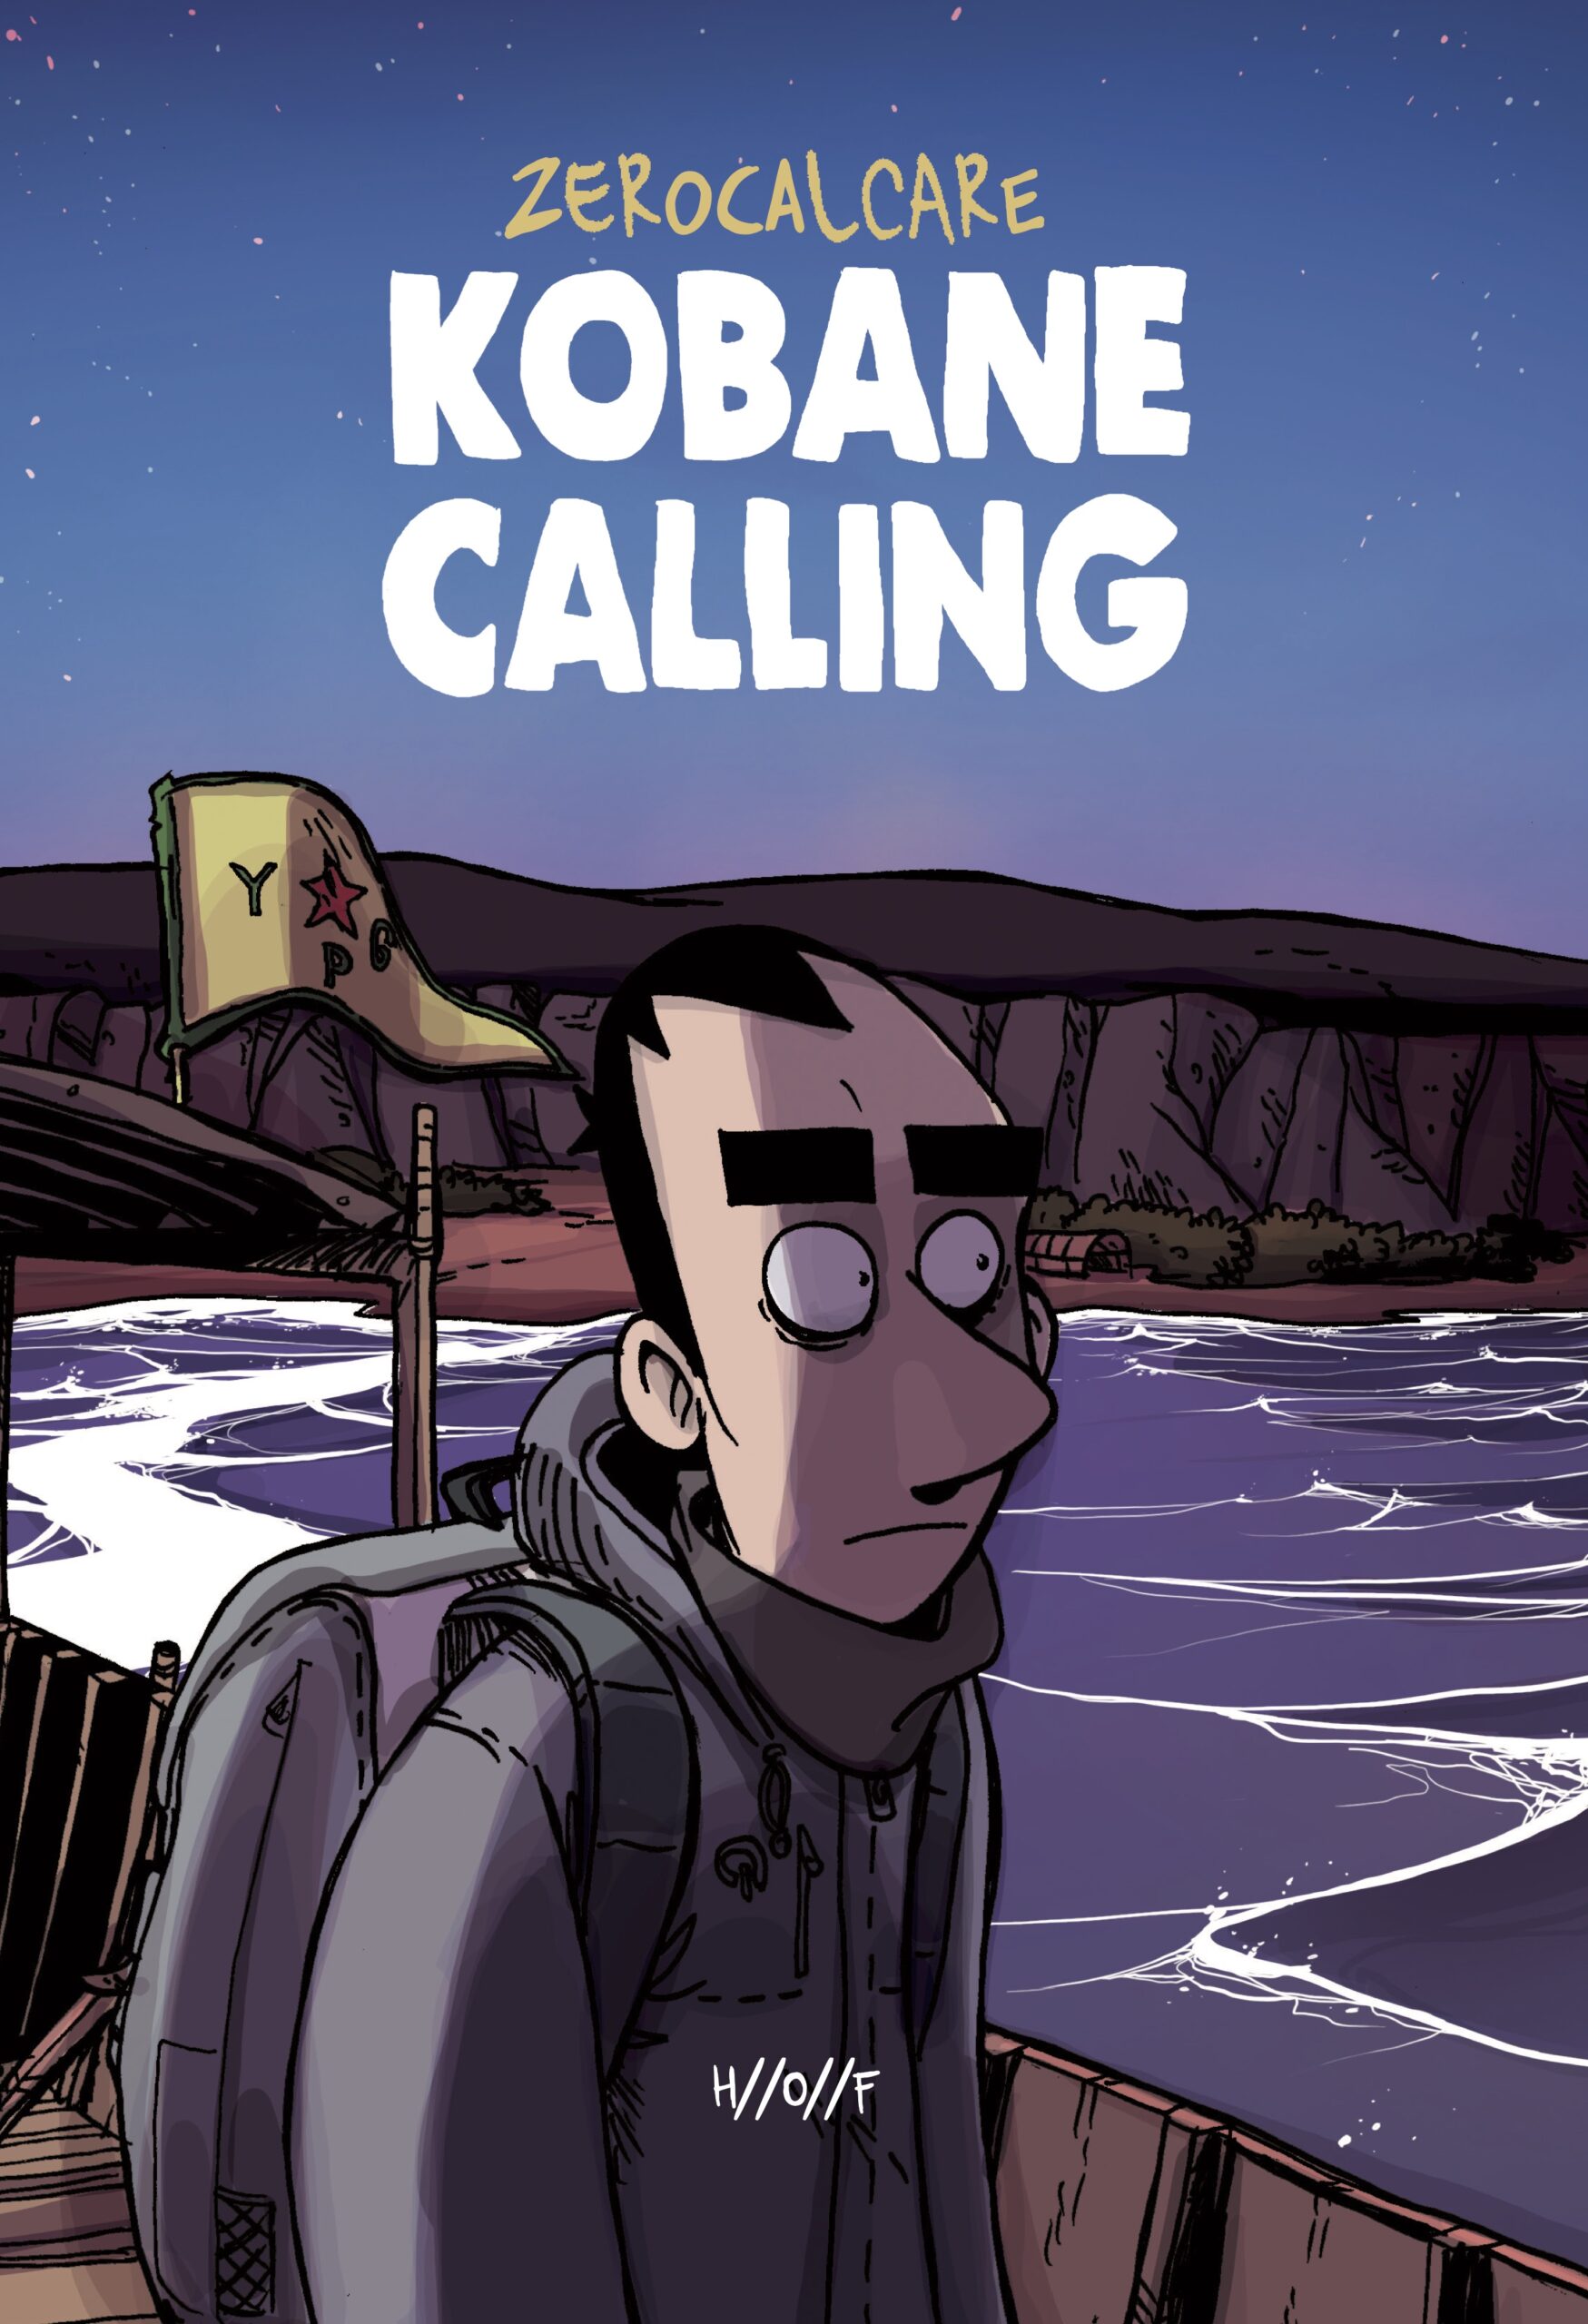 Kobane Calling